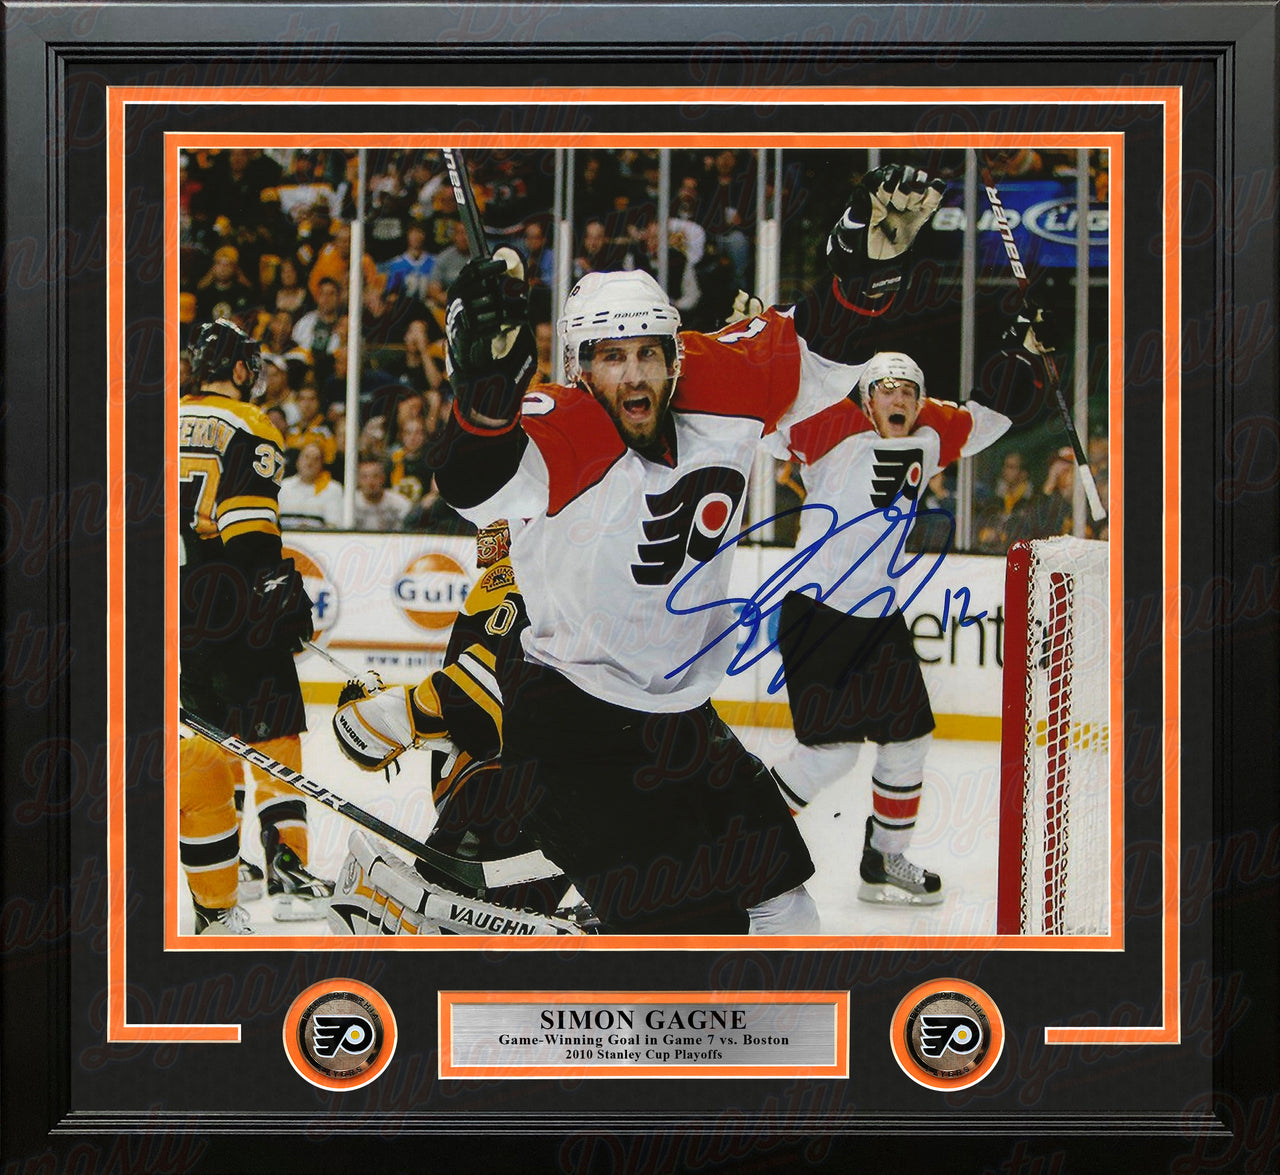 Simon Gagne Philadelphia Flyers Gm 7 Game-Winning Goal v Bruins Autographed 11x14 Framed Color Photo